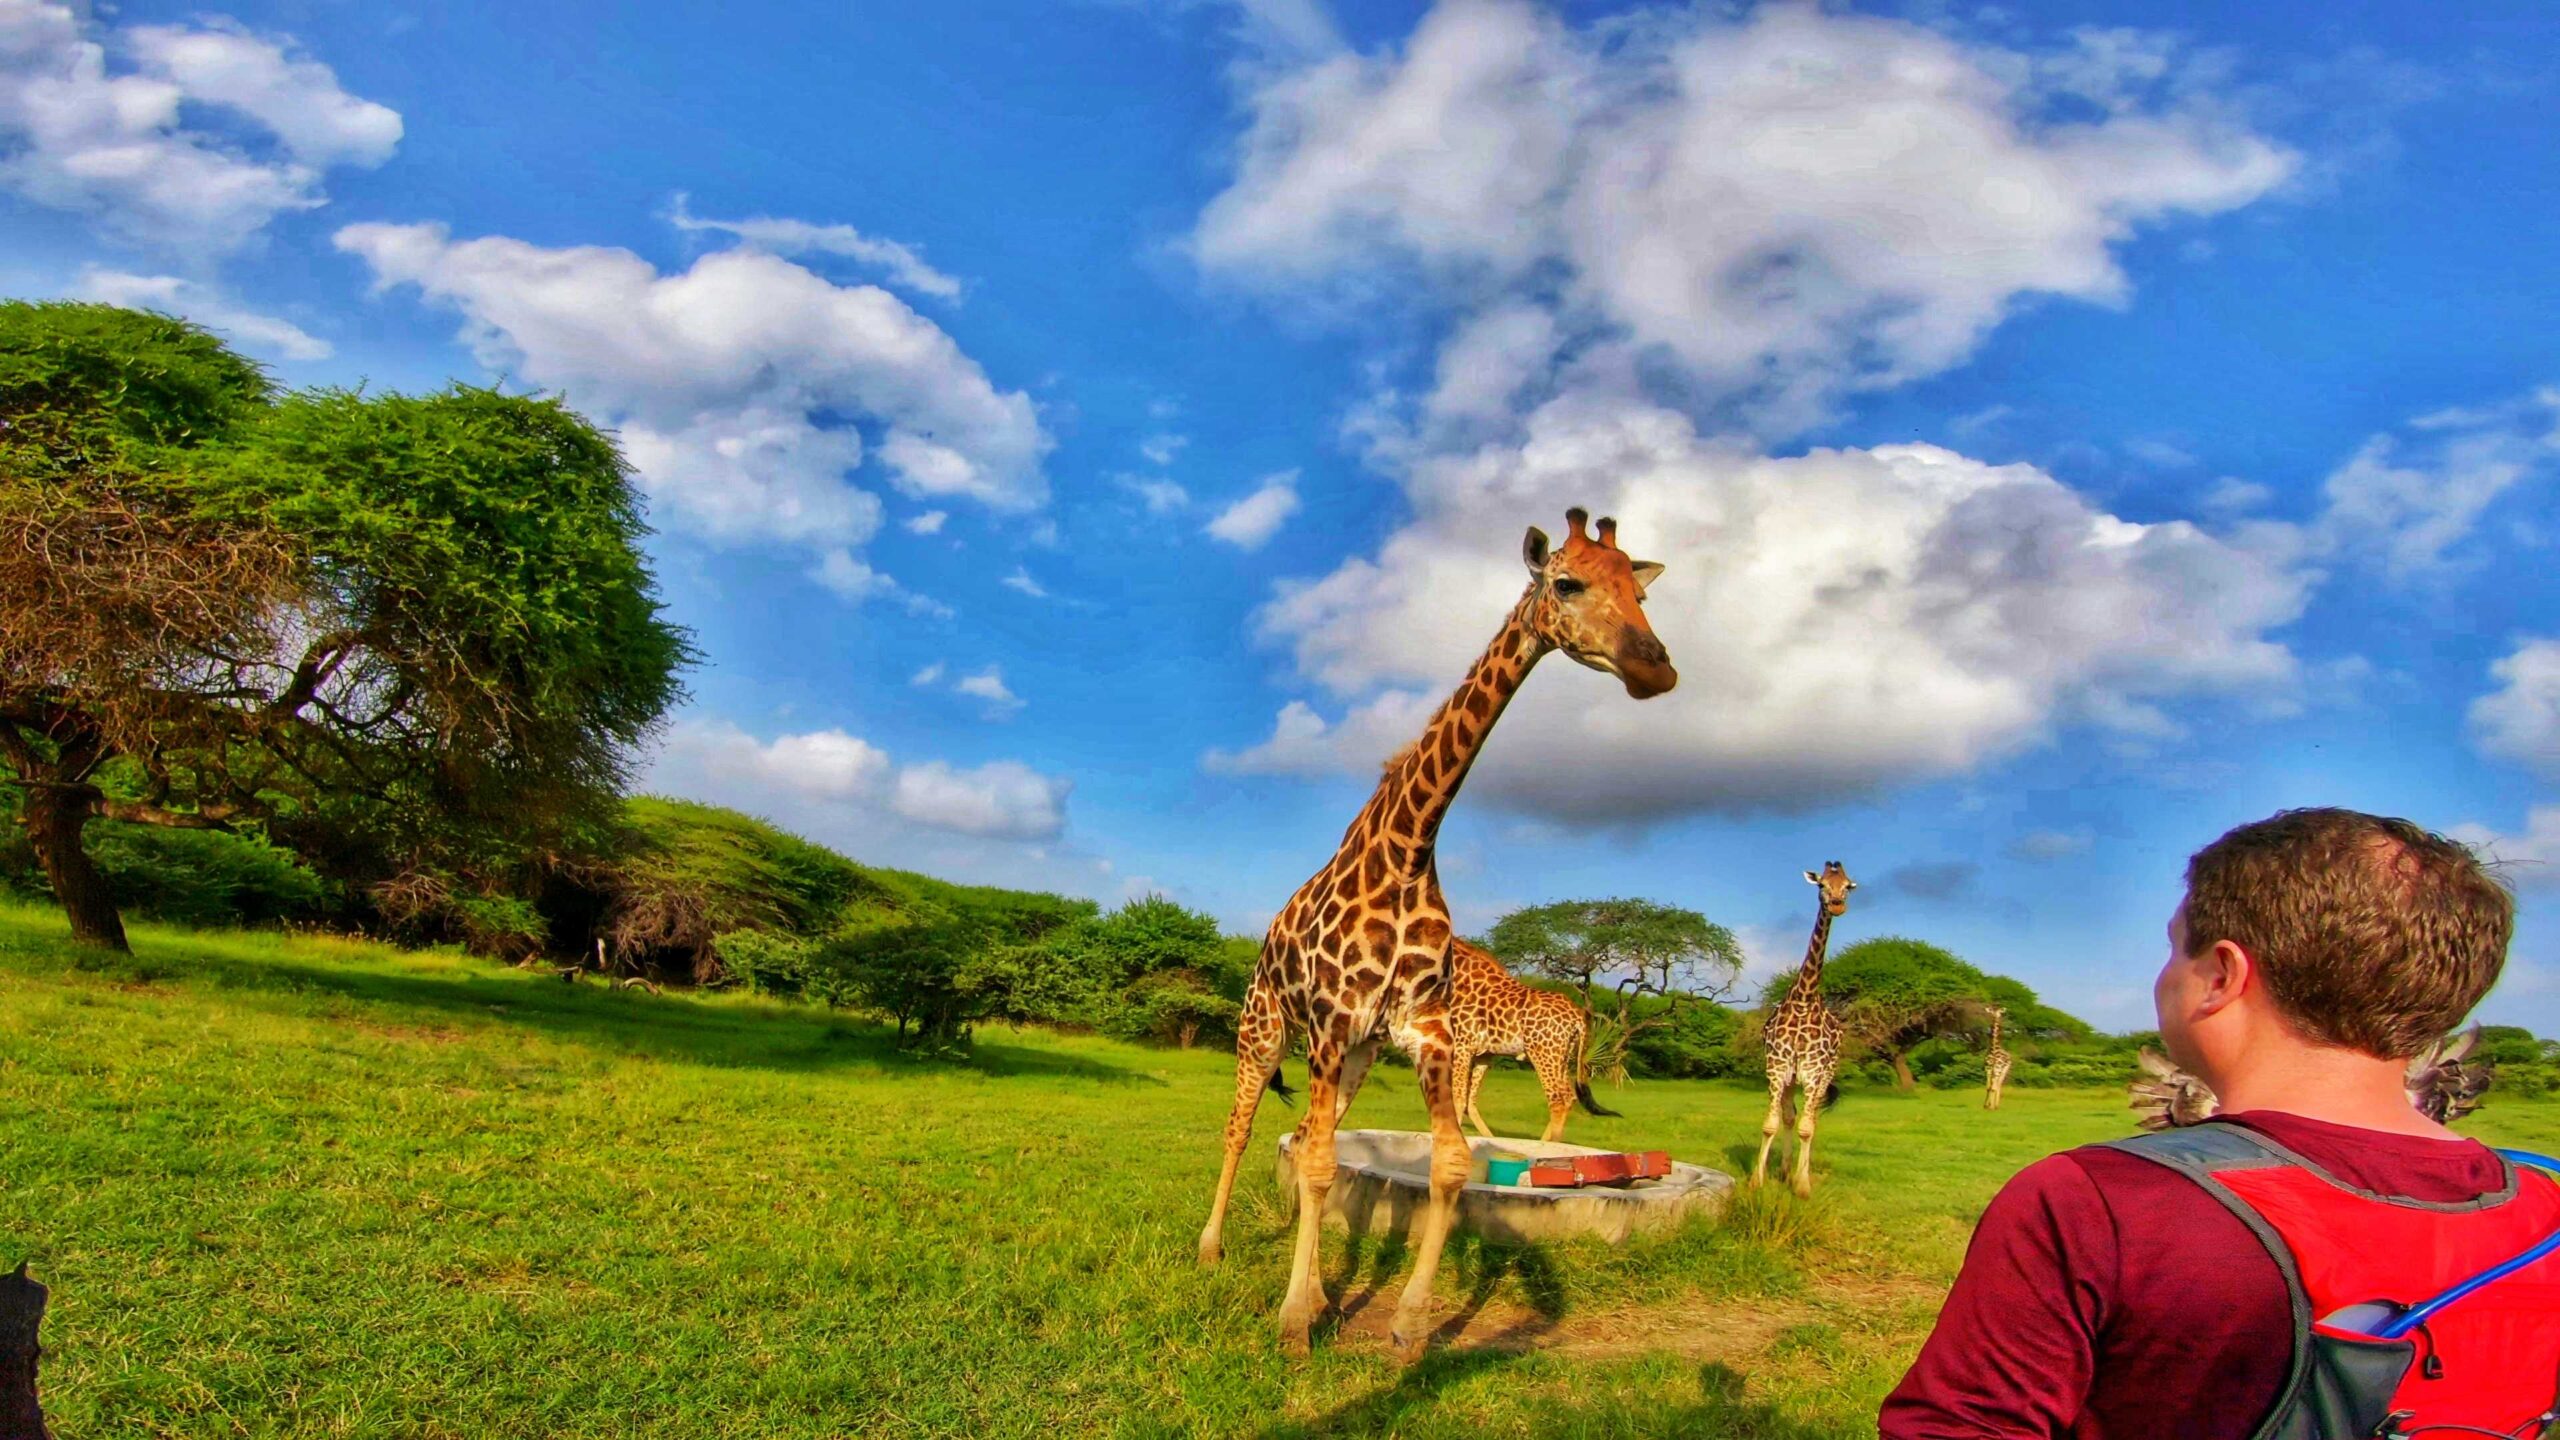 Nguuni Nature Sanctuary with amazing giraffes